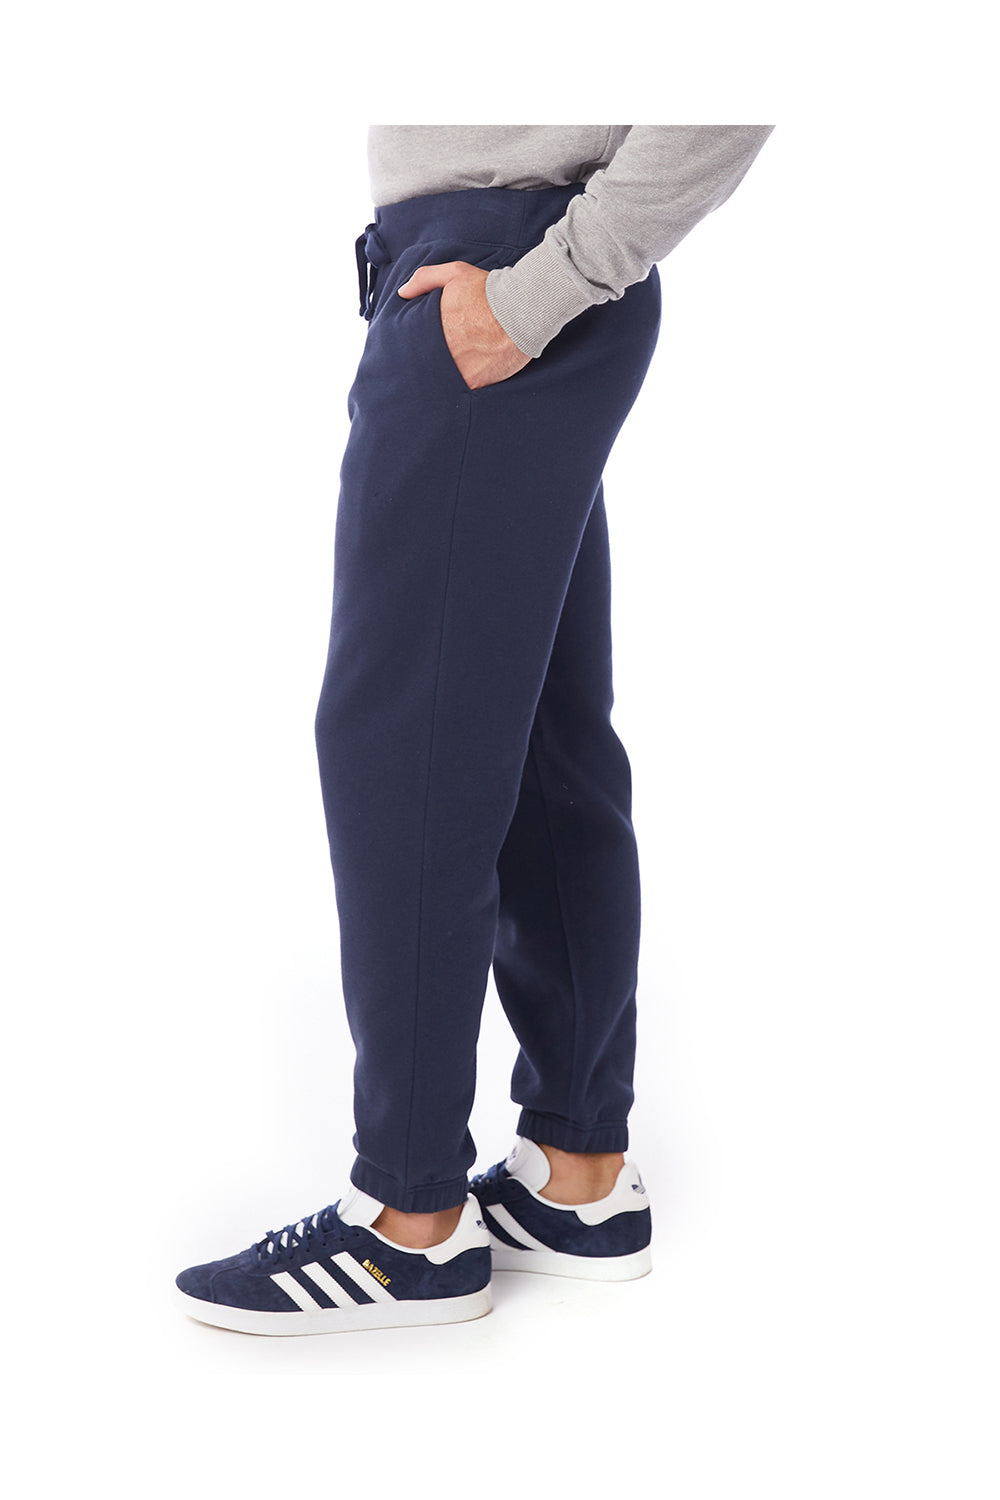 Alternative 8803PF Mens Eco Cozy Fleece Sweatpants w/ Pockets Midnight Navy Blue Model Side